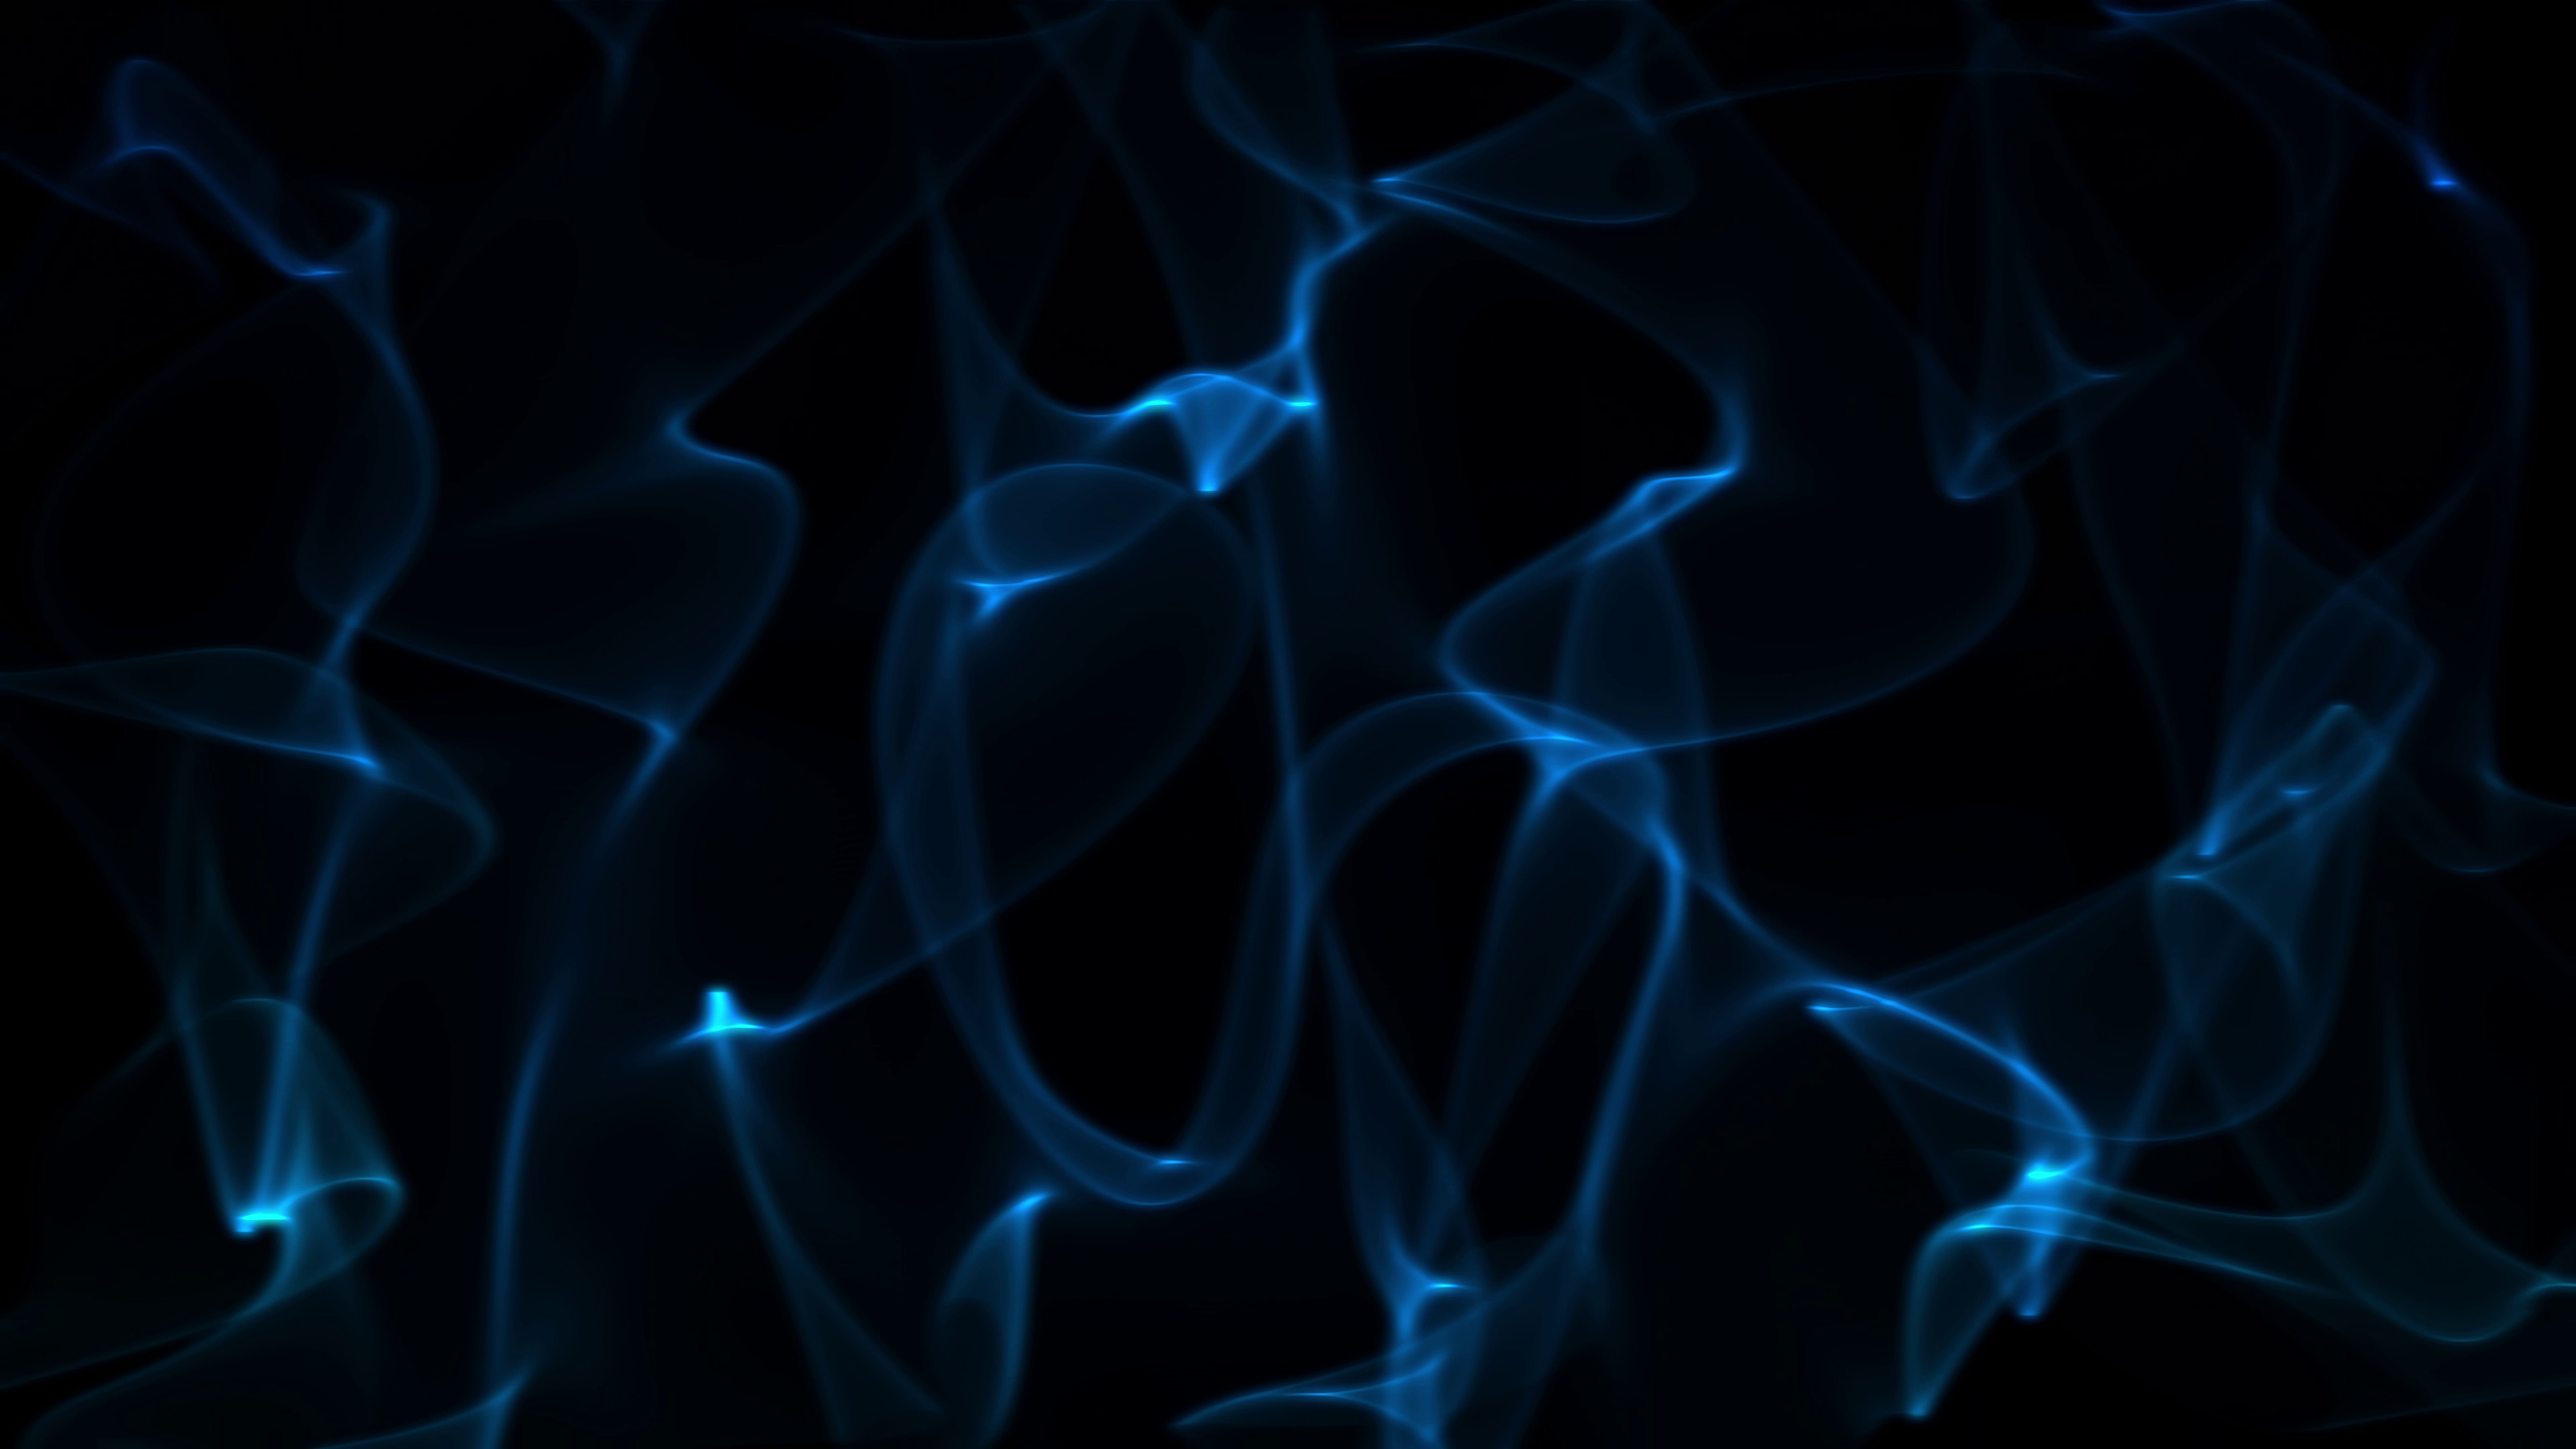 4K Rising Blue Smoke Overlay Effect Free Download || Free Overlay Effect For Editing